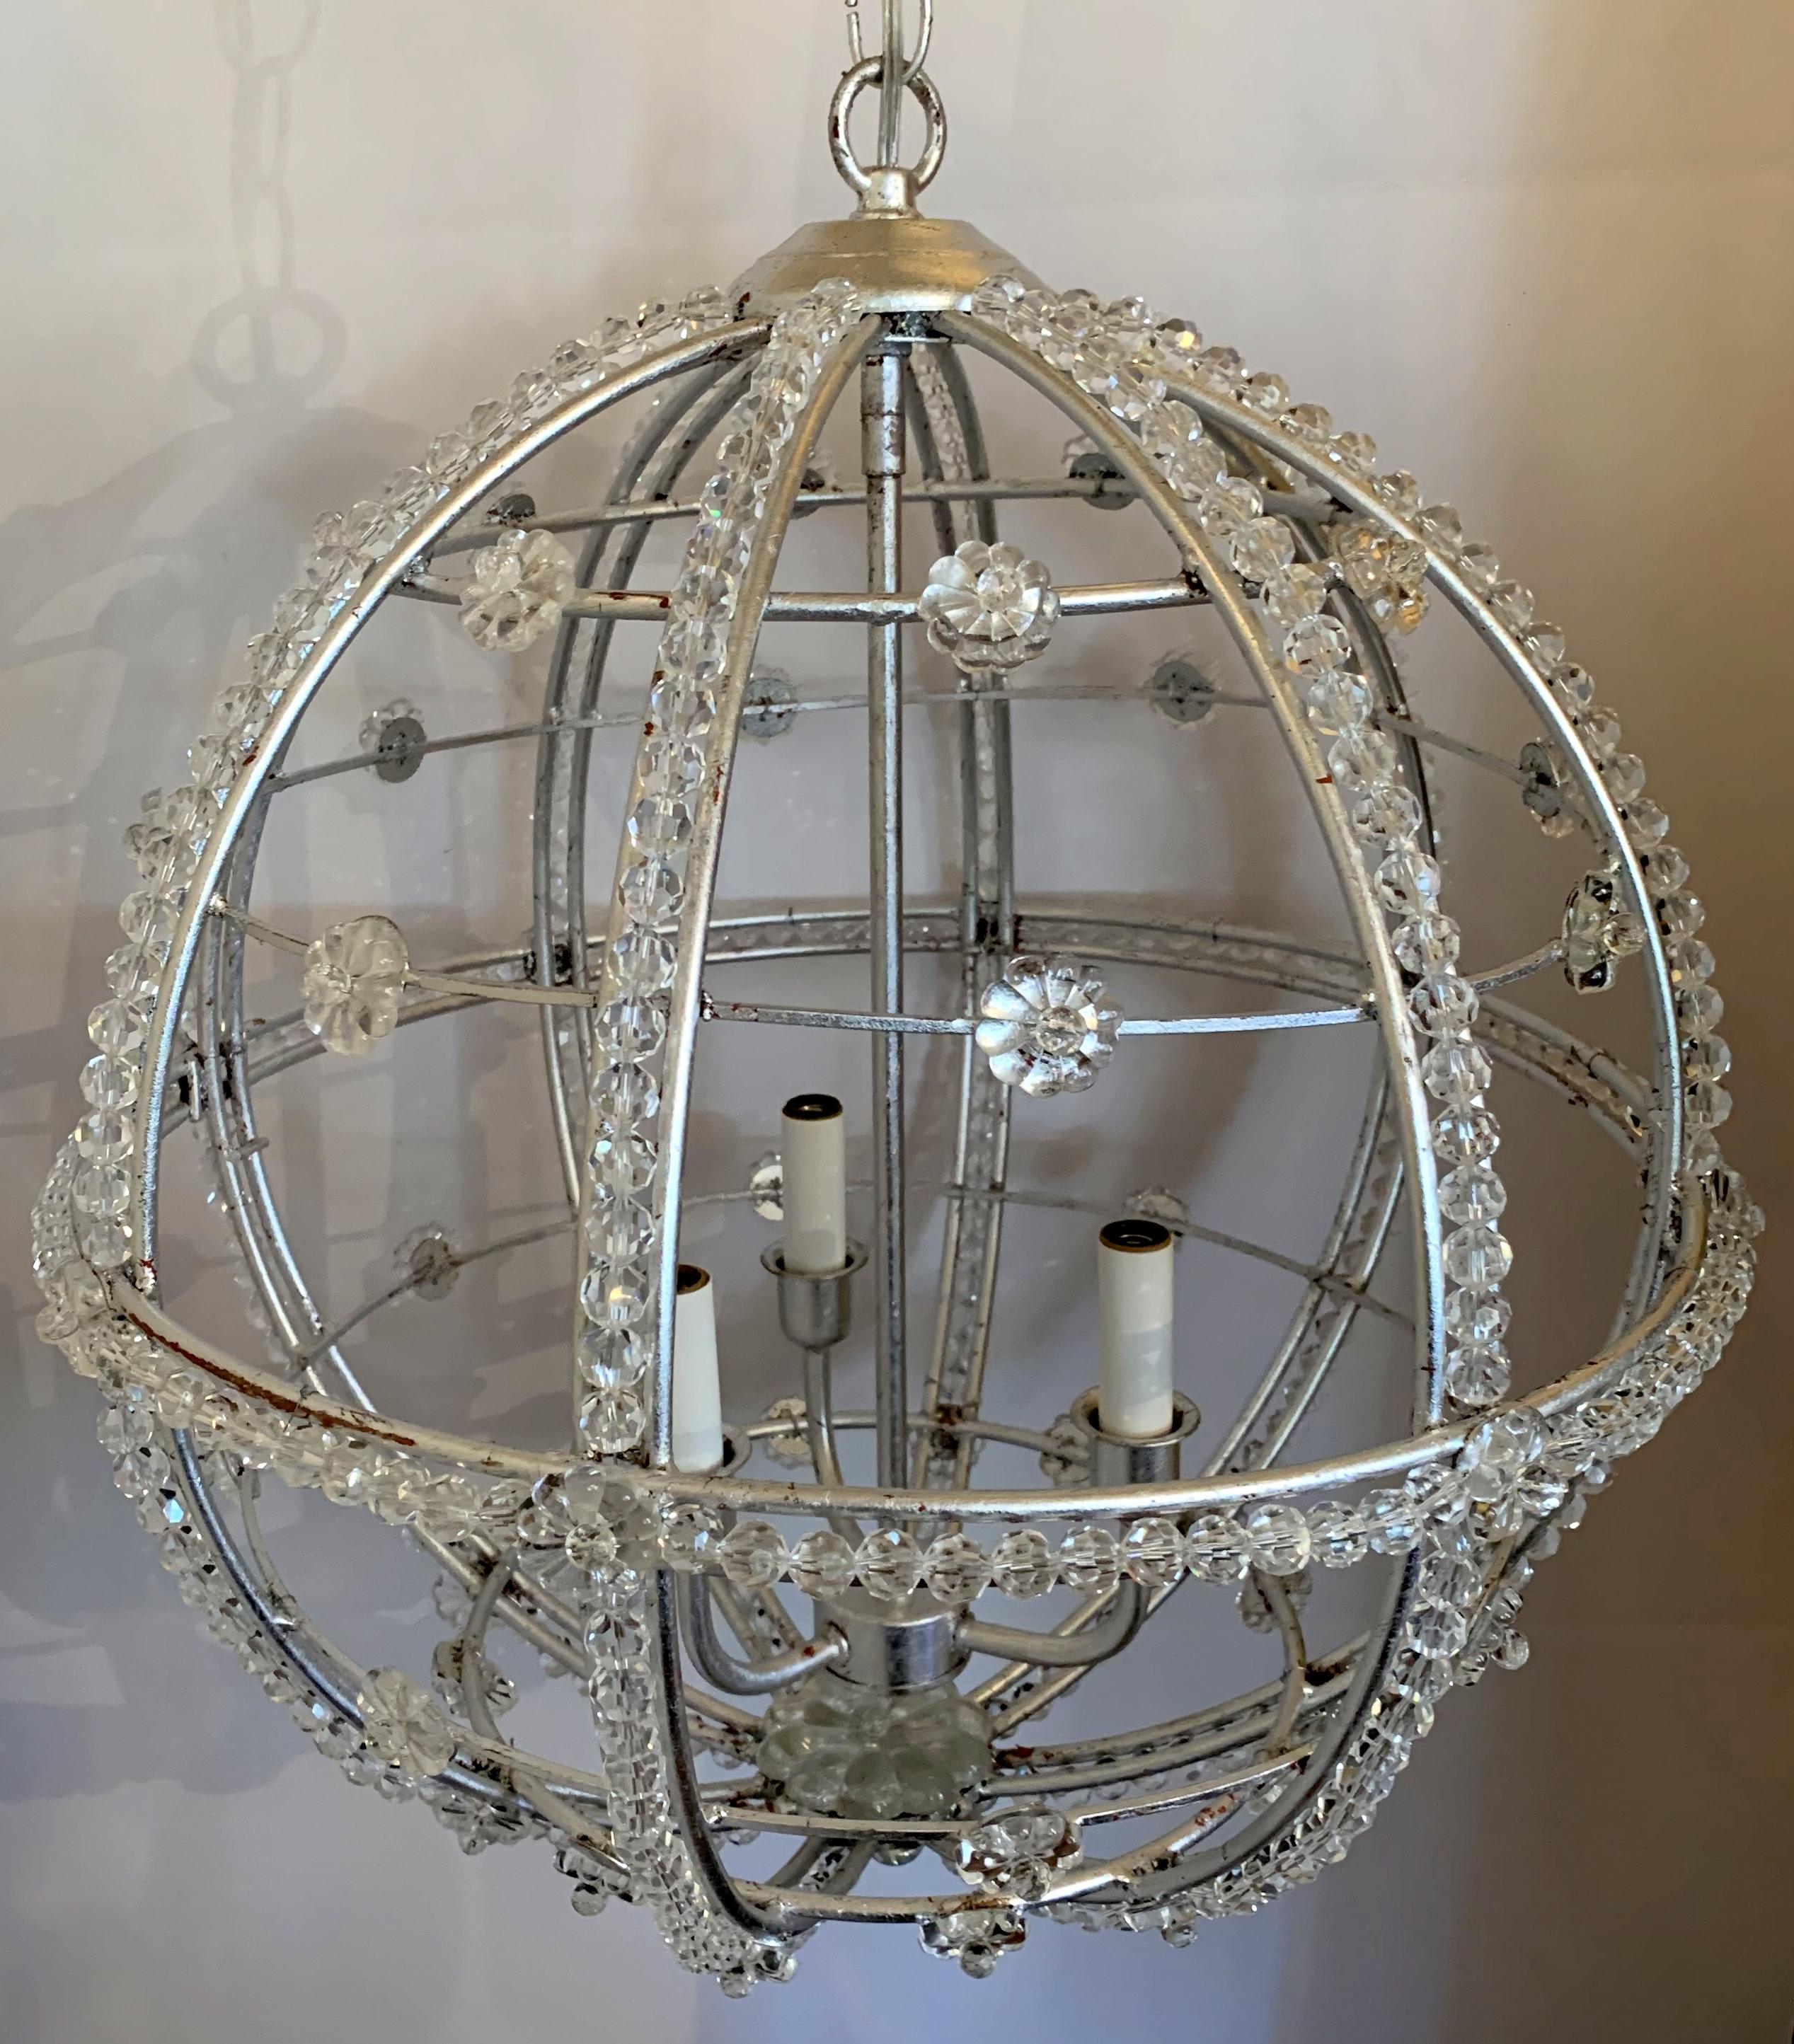 Silvered Mid-Century Modern Transitional Silver Leaf Sputnik Ball Chandelier Fixture For Sale